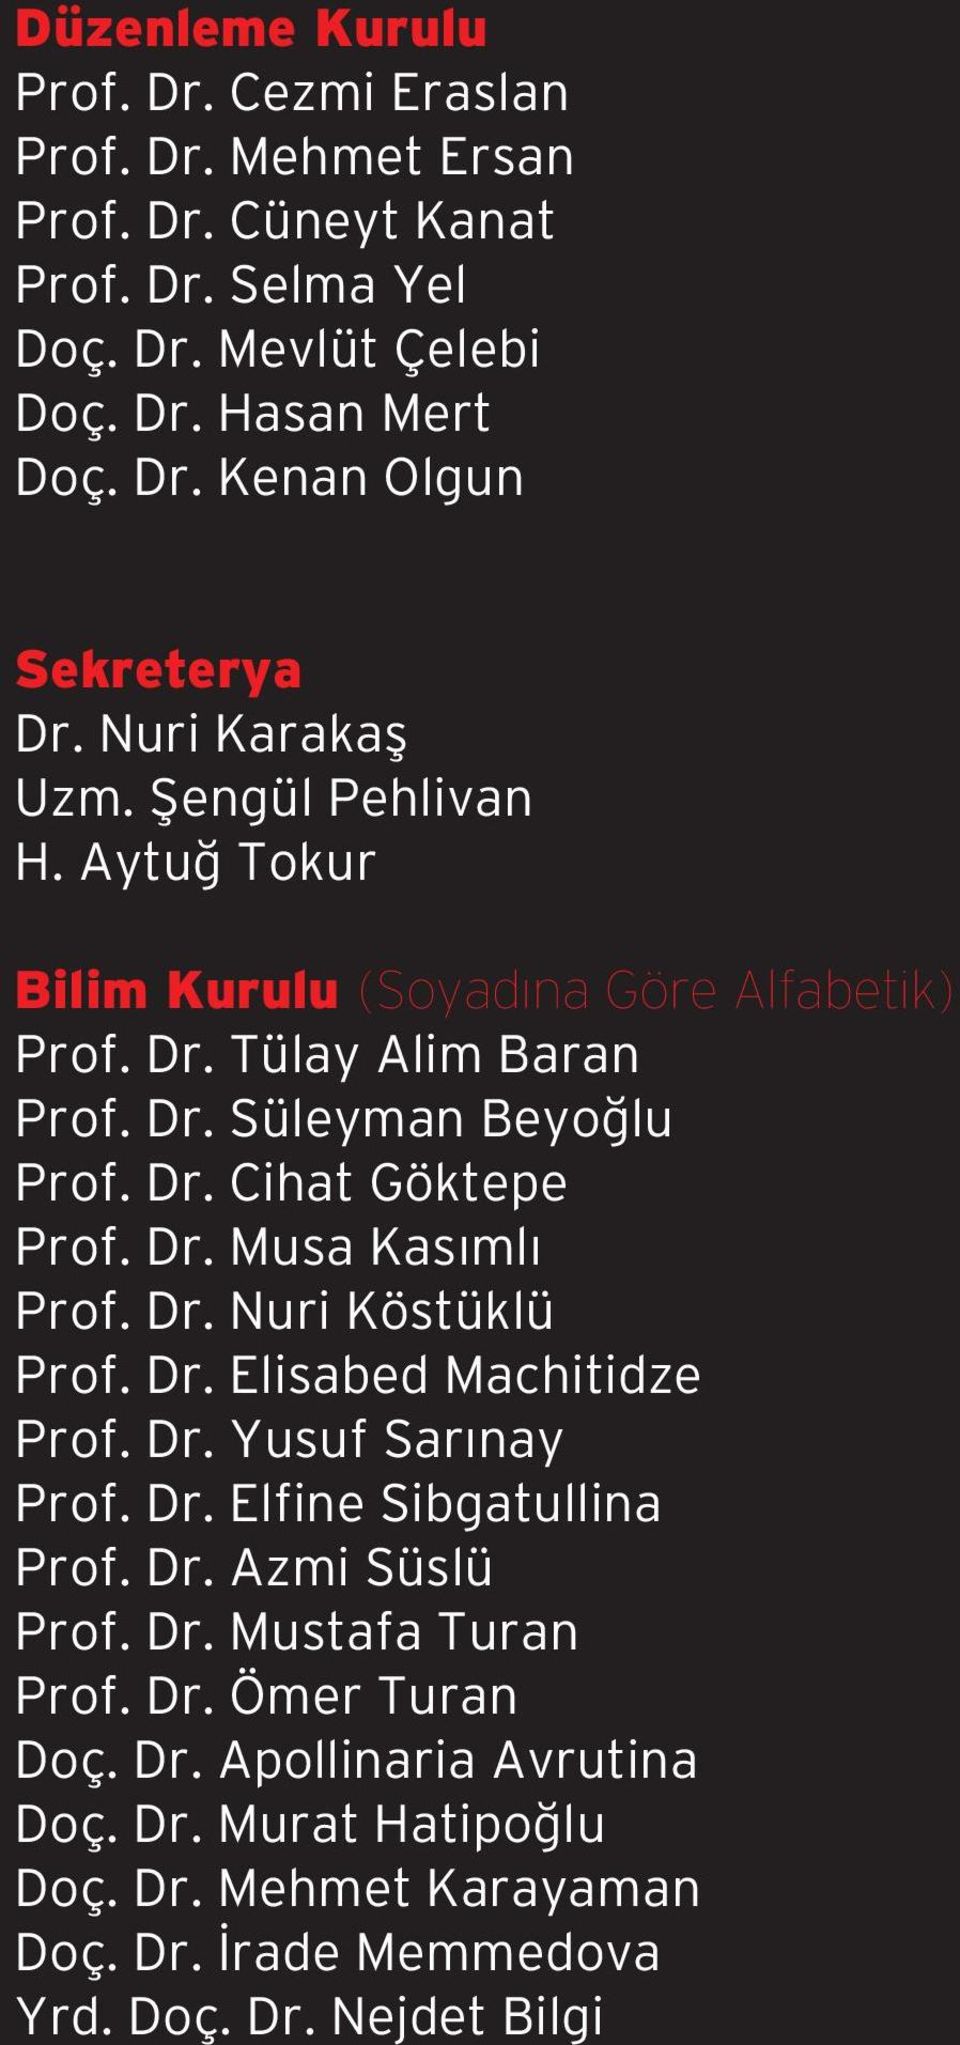 Dr. Musa Kasımlı Prof. Dr. Nuri Köstüklü Prof. Dr. Elisabed Machitidze Prof. Dr. Yusuf Sarınay Prof. Dr. Elfine Sibgatullina Prof. Dr. Azmi Süslü Prof. Dr. Mustafa Turan Prof.